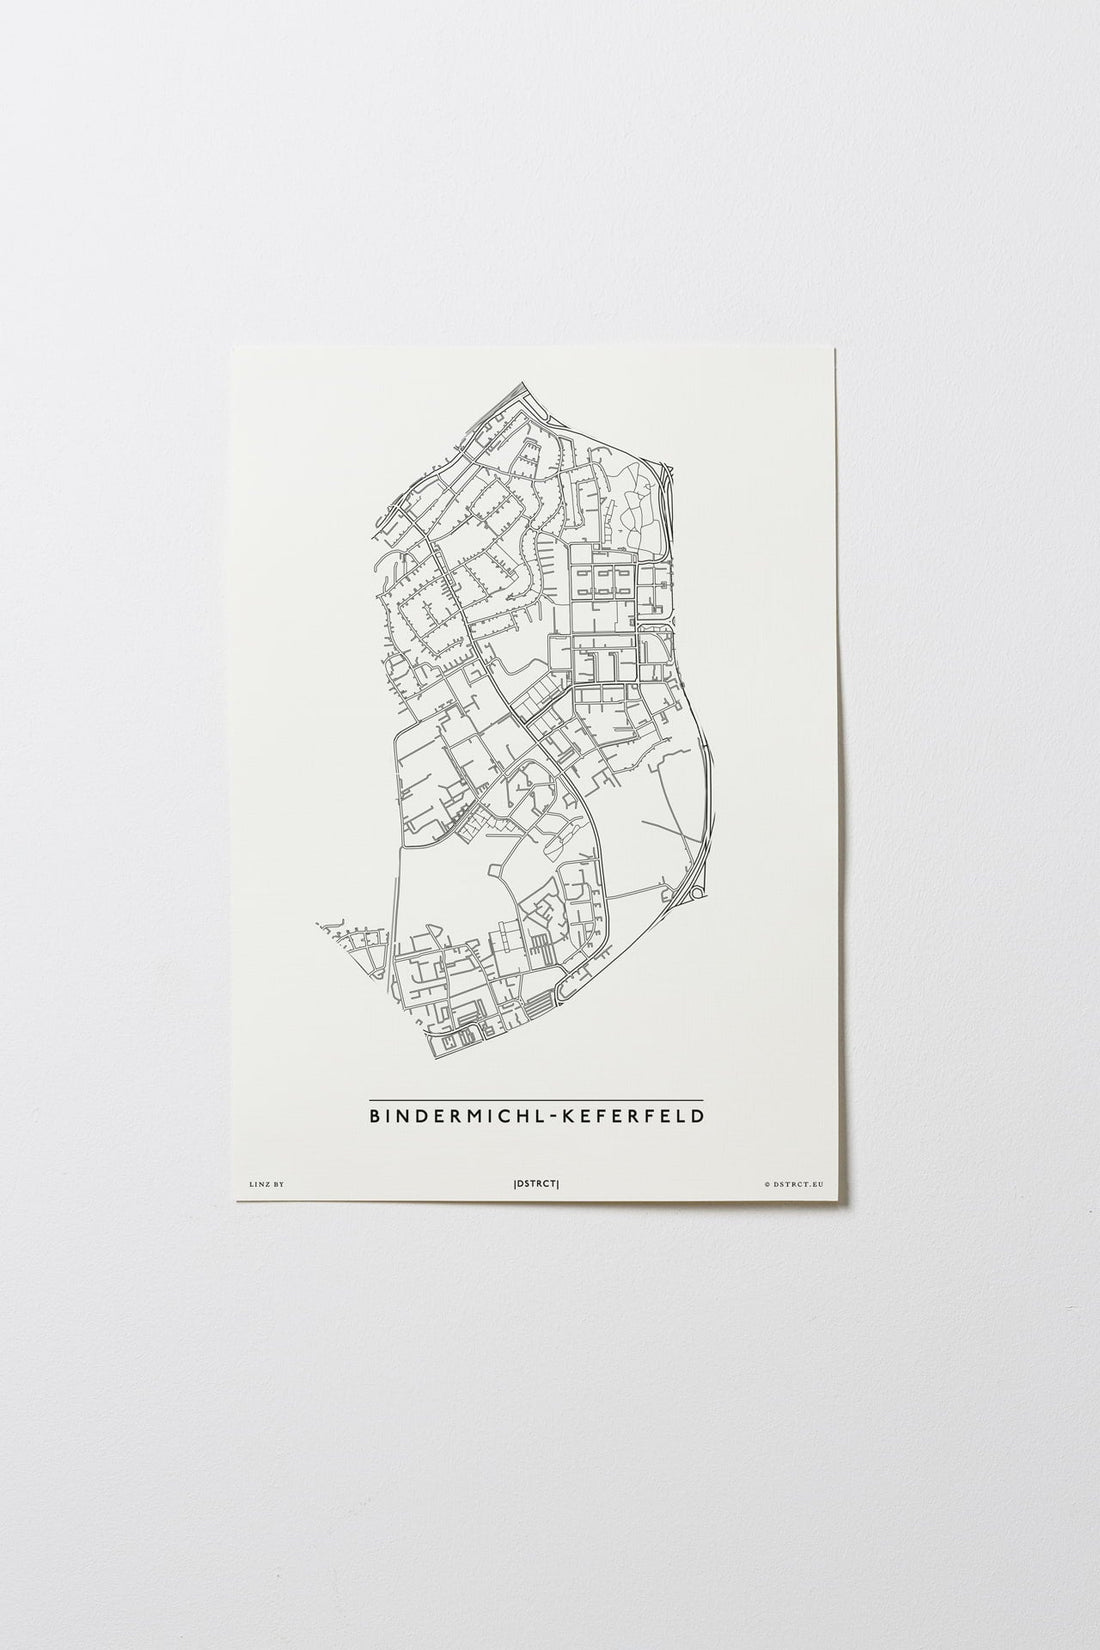 Bindermichl-Keferfeld | 4020 | Linz | City Map Karte Plan Bild Print Poster Ohne Rahmen Unframed